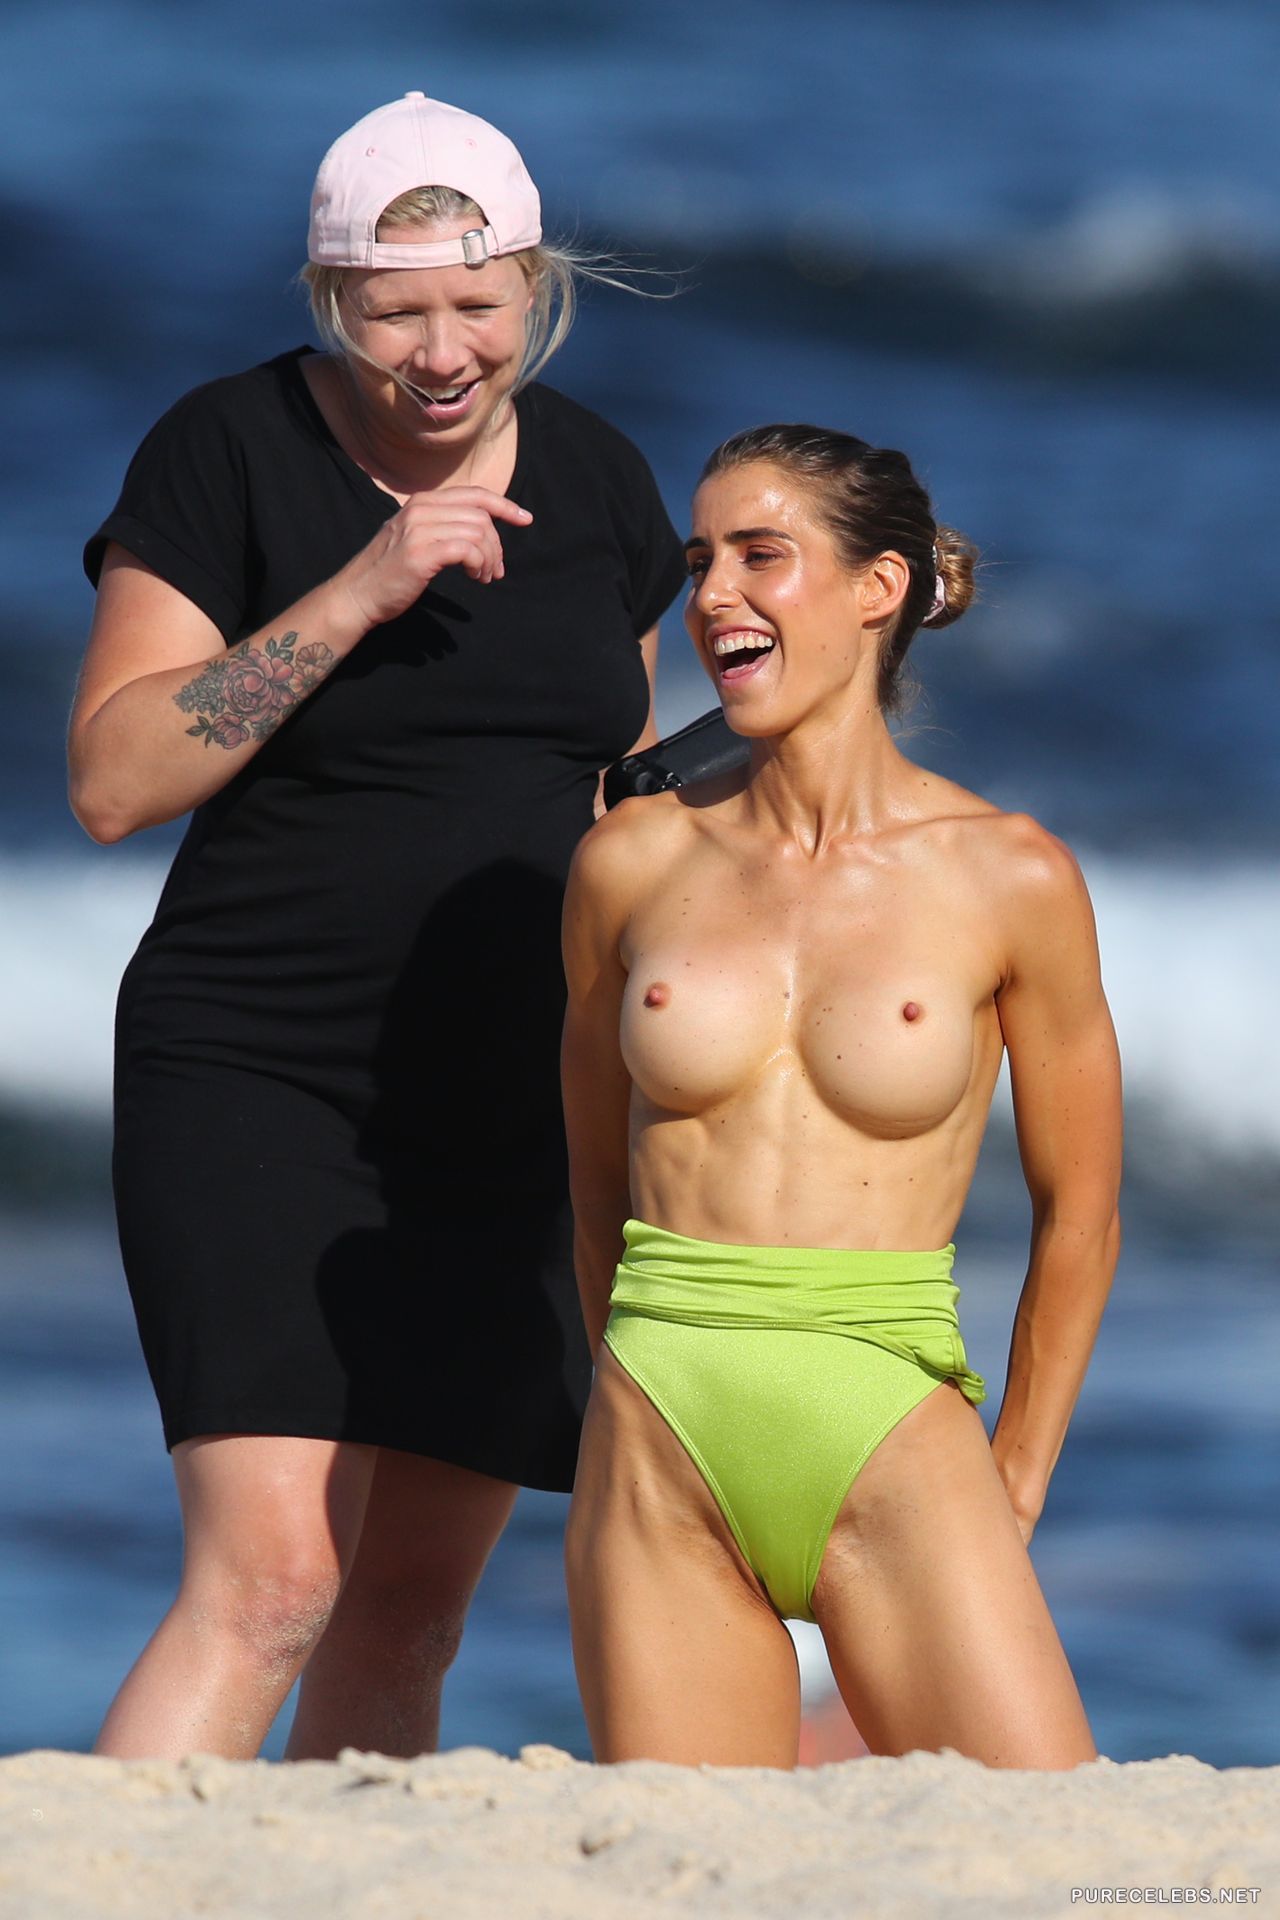 Leaked model claudia jovanovski topless and tight bikini photos